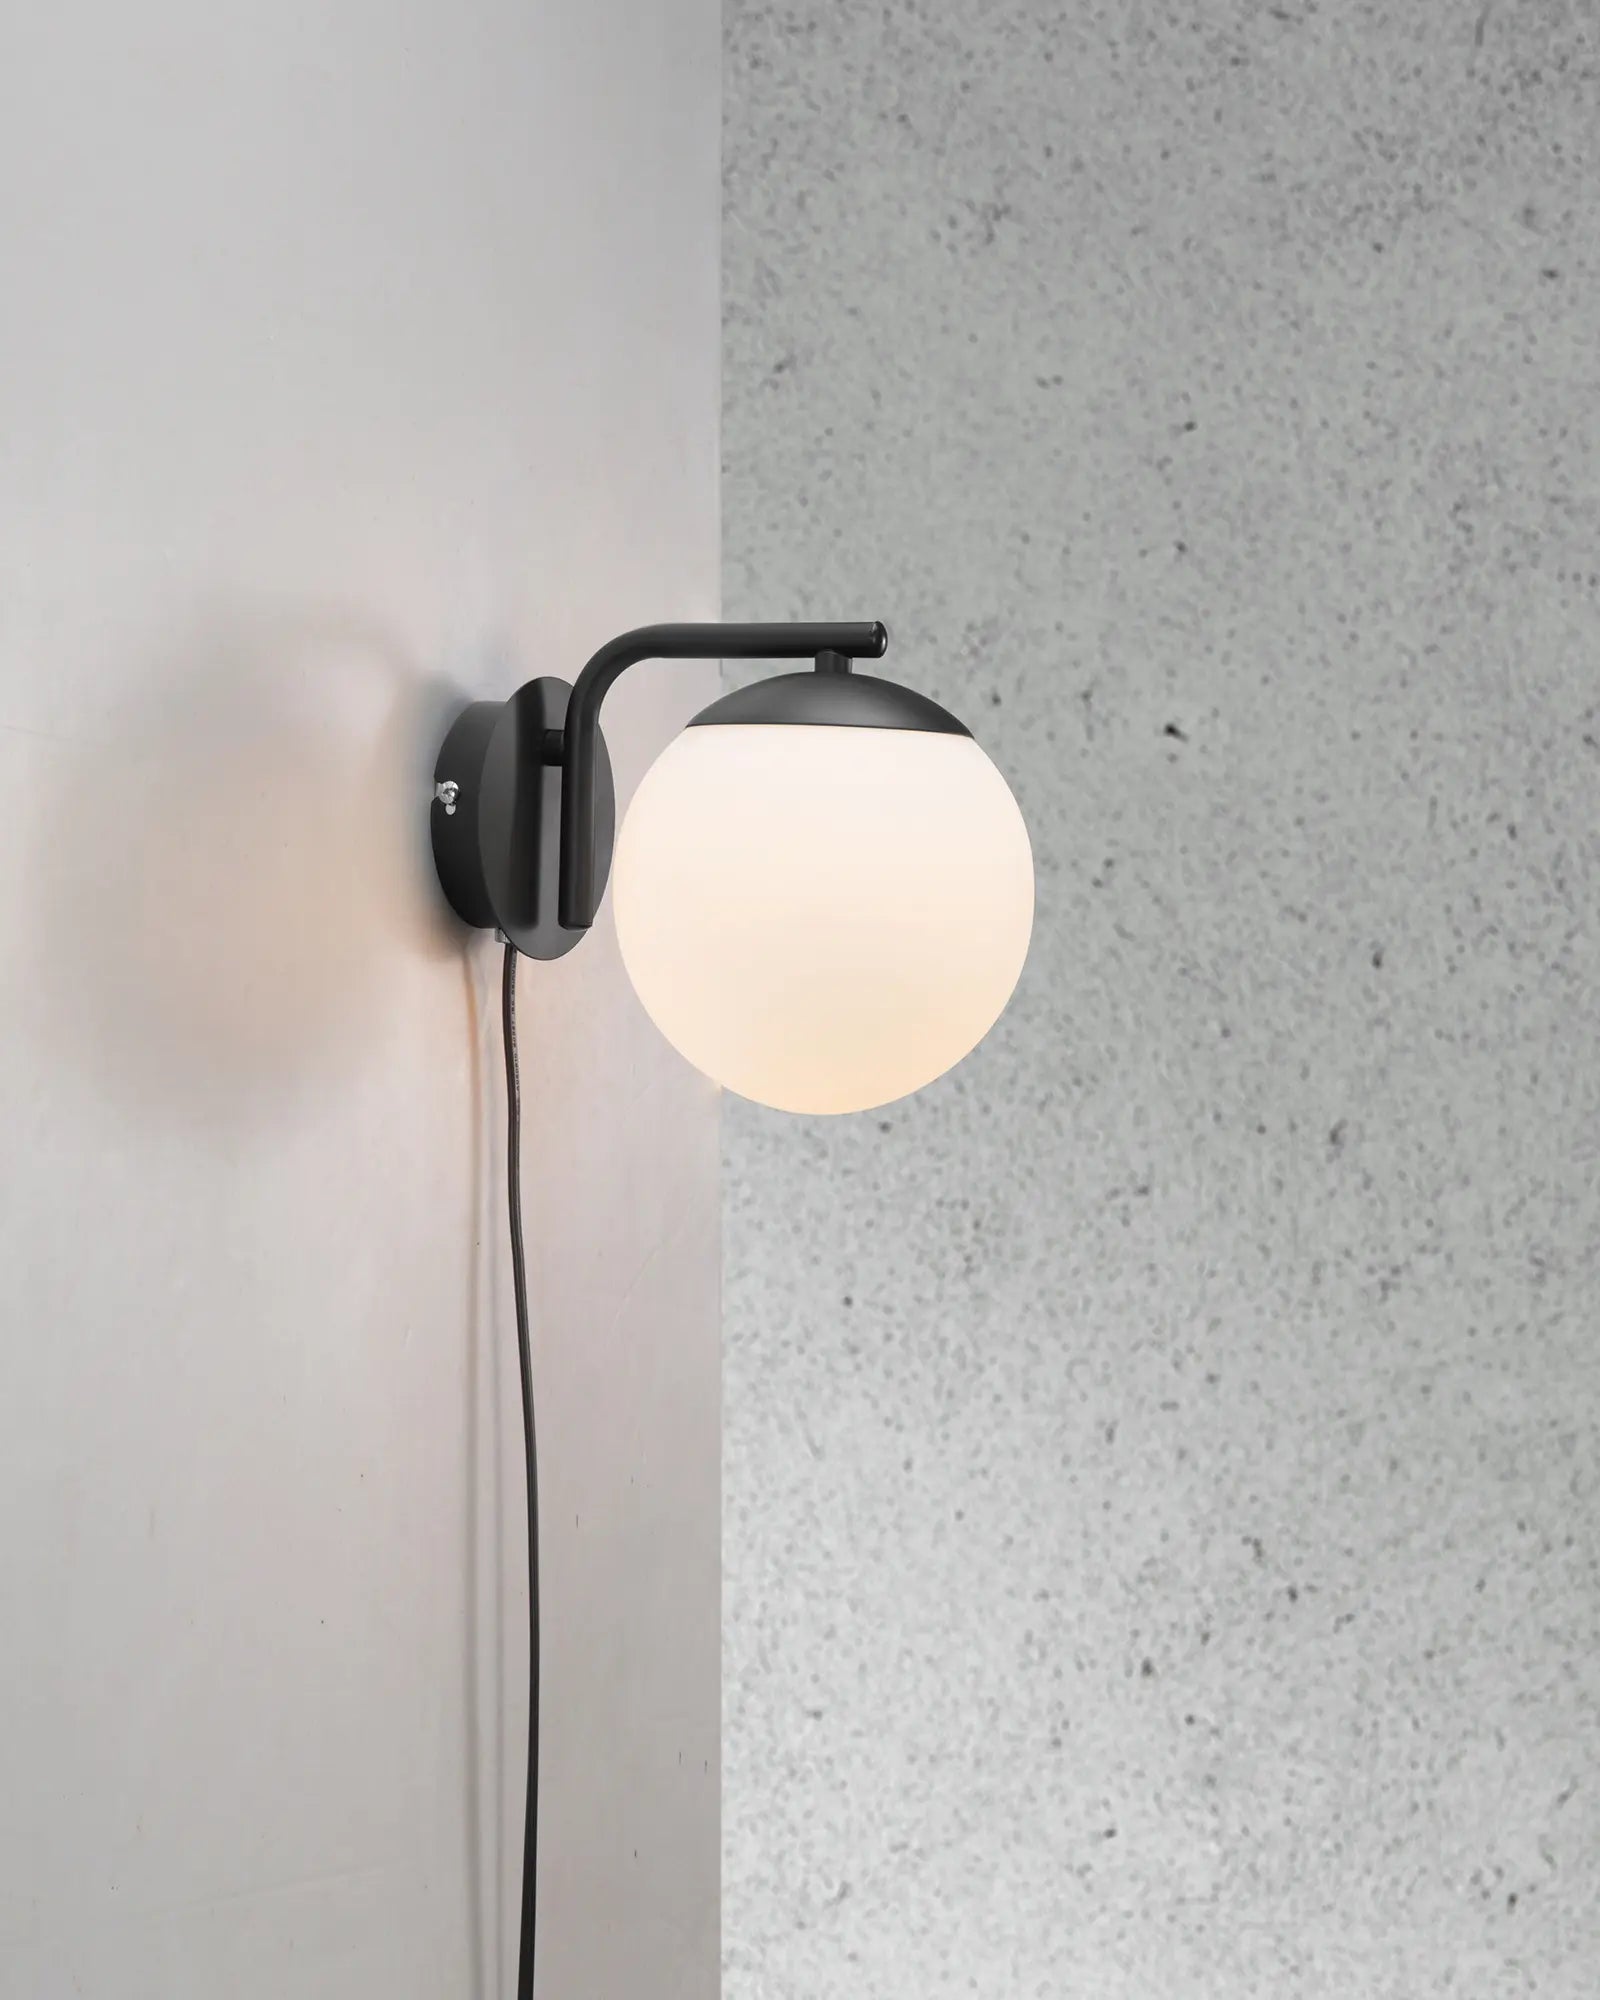 Grant Scandinavian glass orb and black wall light